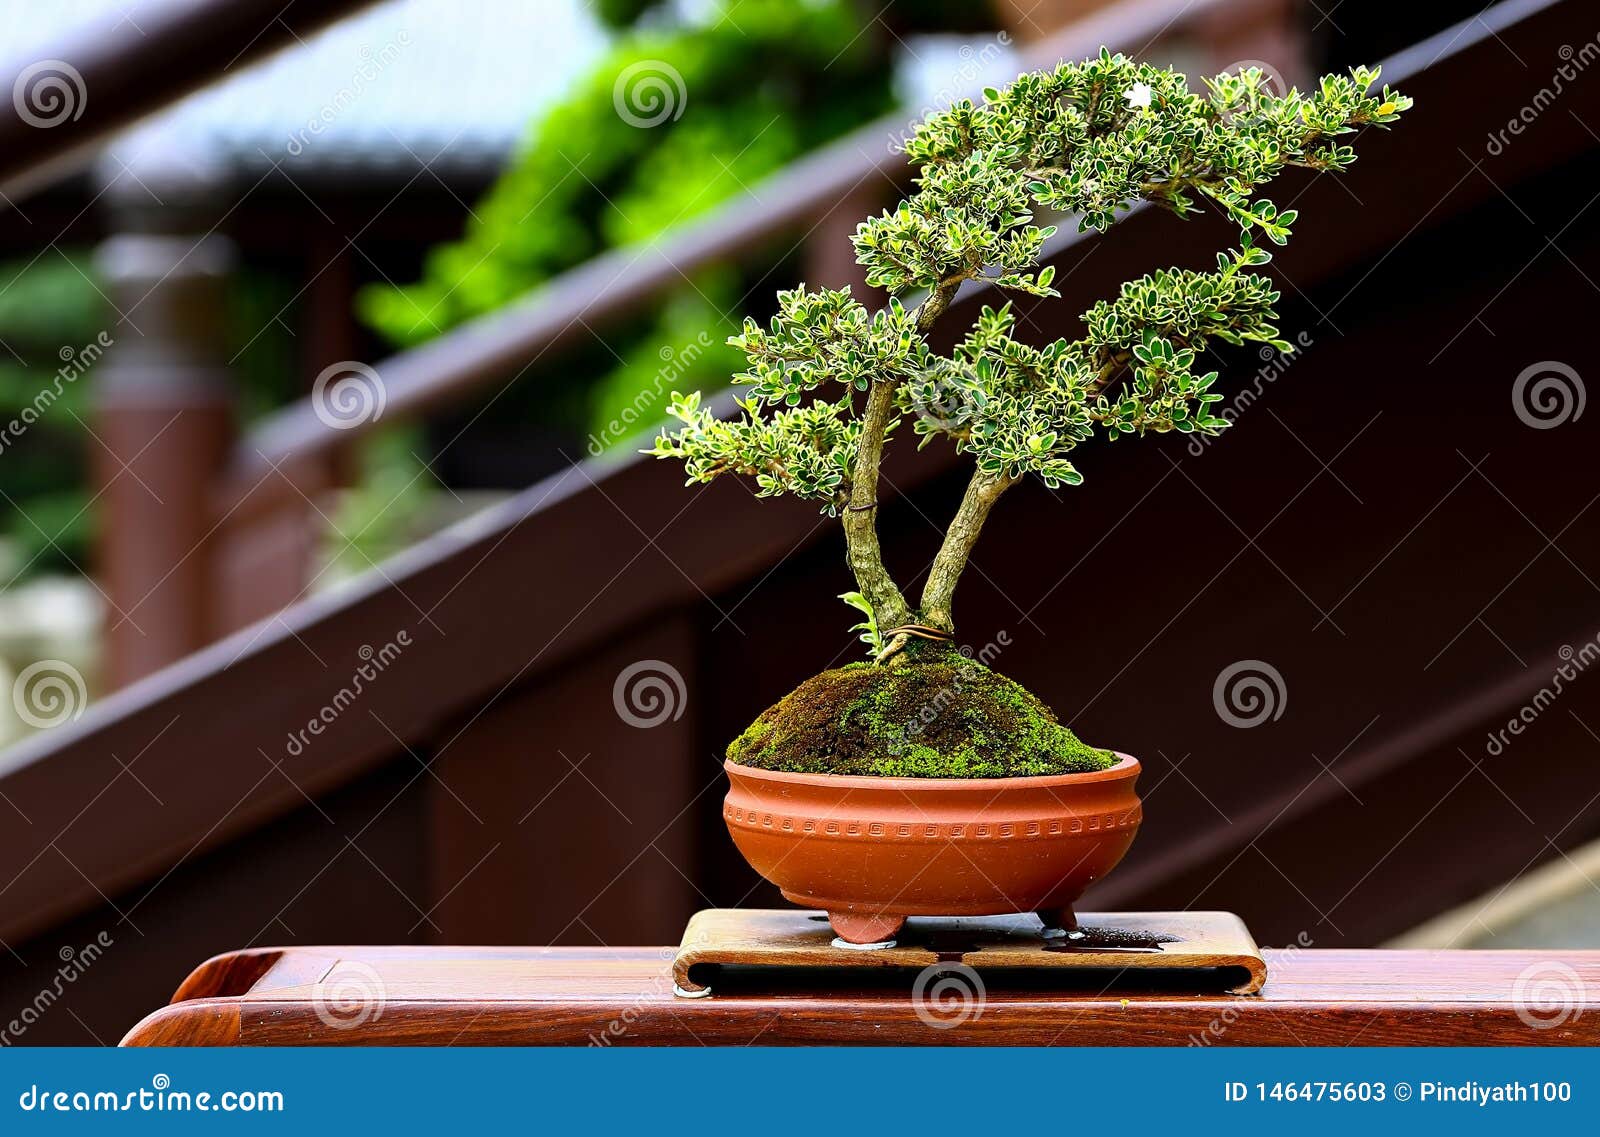 Brazil Bougainvillea Miniature Bonsai Plant Stock Image - Image of miniature,  beautiful: 146475603